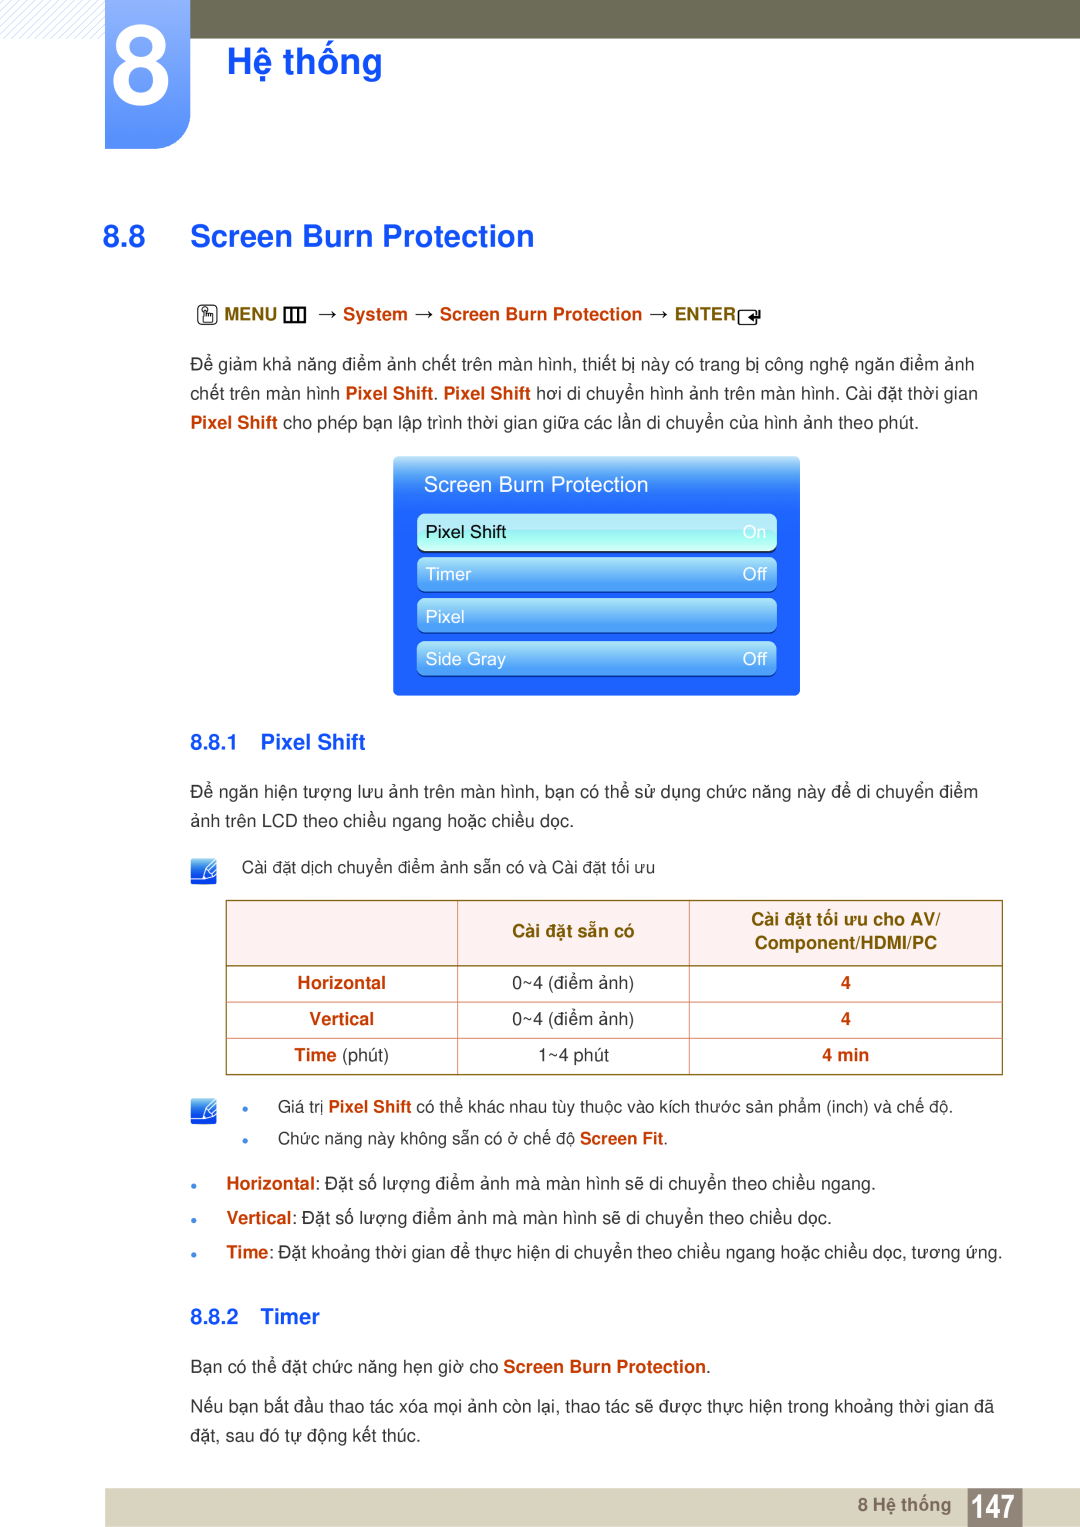 Samsung LH46MEPLGC/XY Pixel Shift, Timer, 8 Hệ thống, O MENU m System Screen Burn Protection ENTER, Side Gray, 4 min 